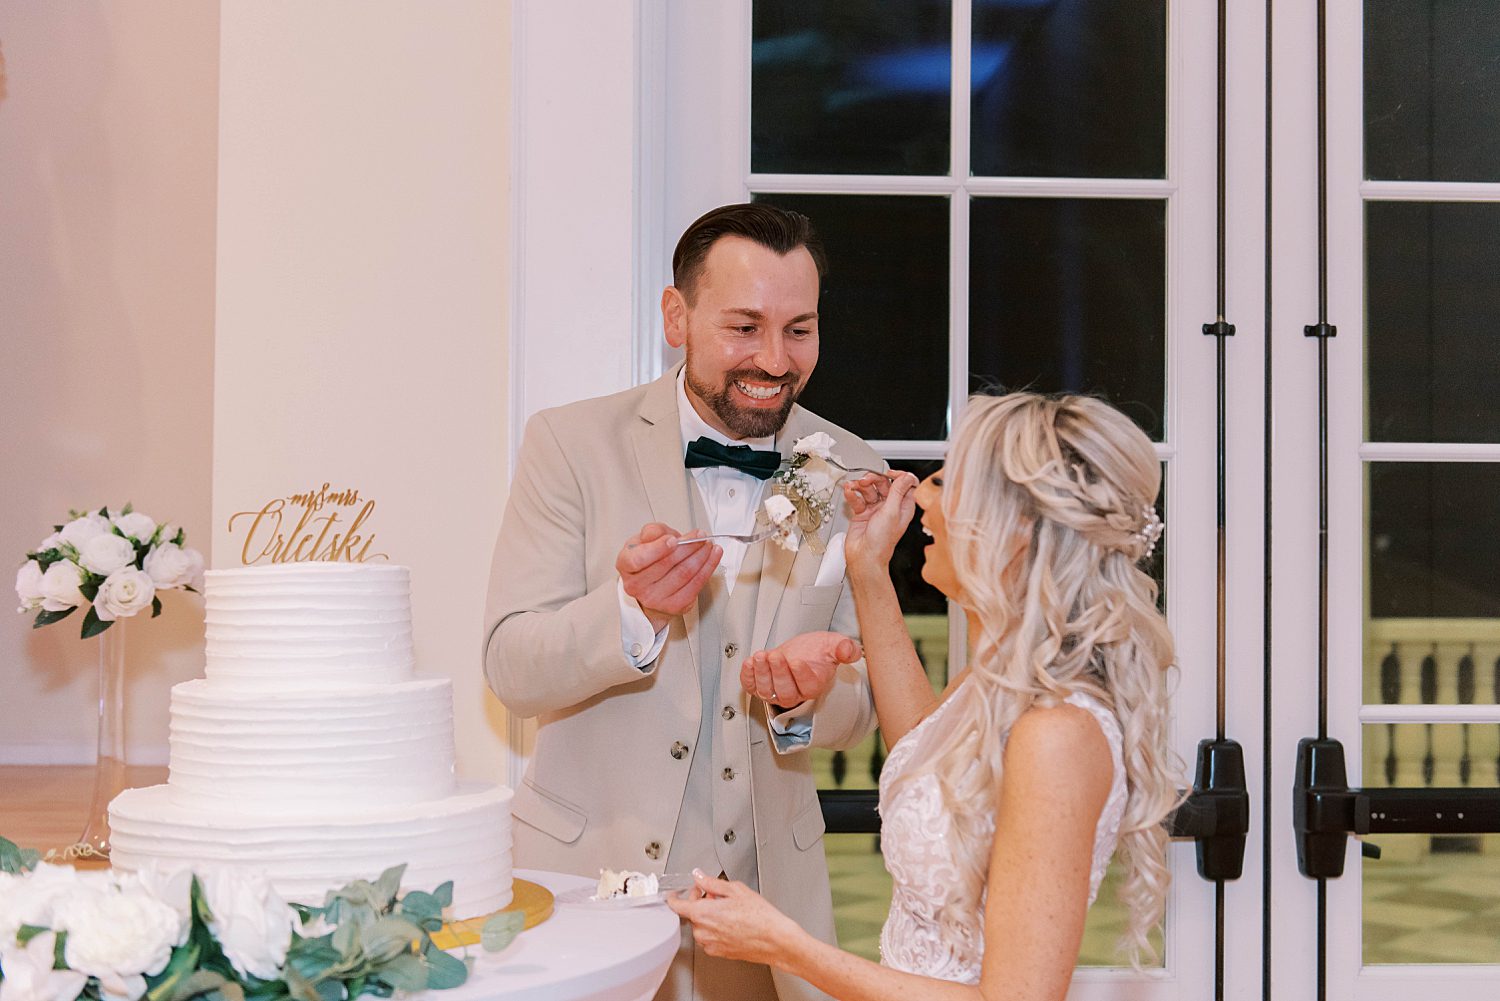 groom feeds bride cake during wedding reception in Florida